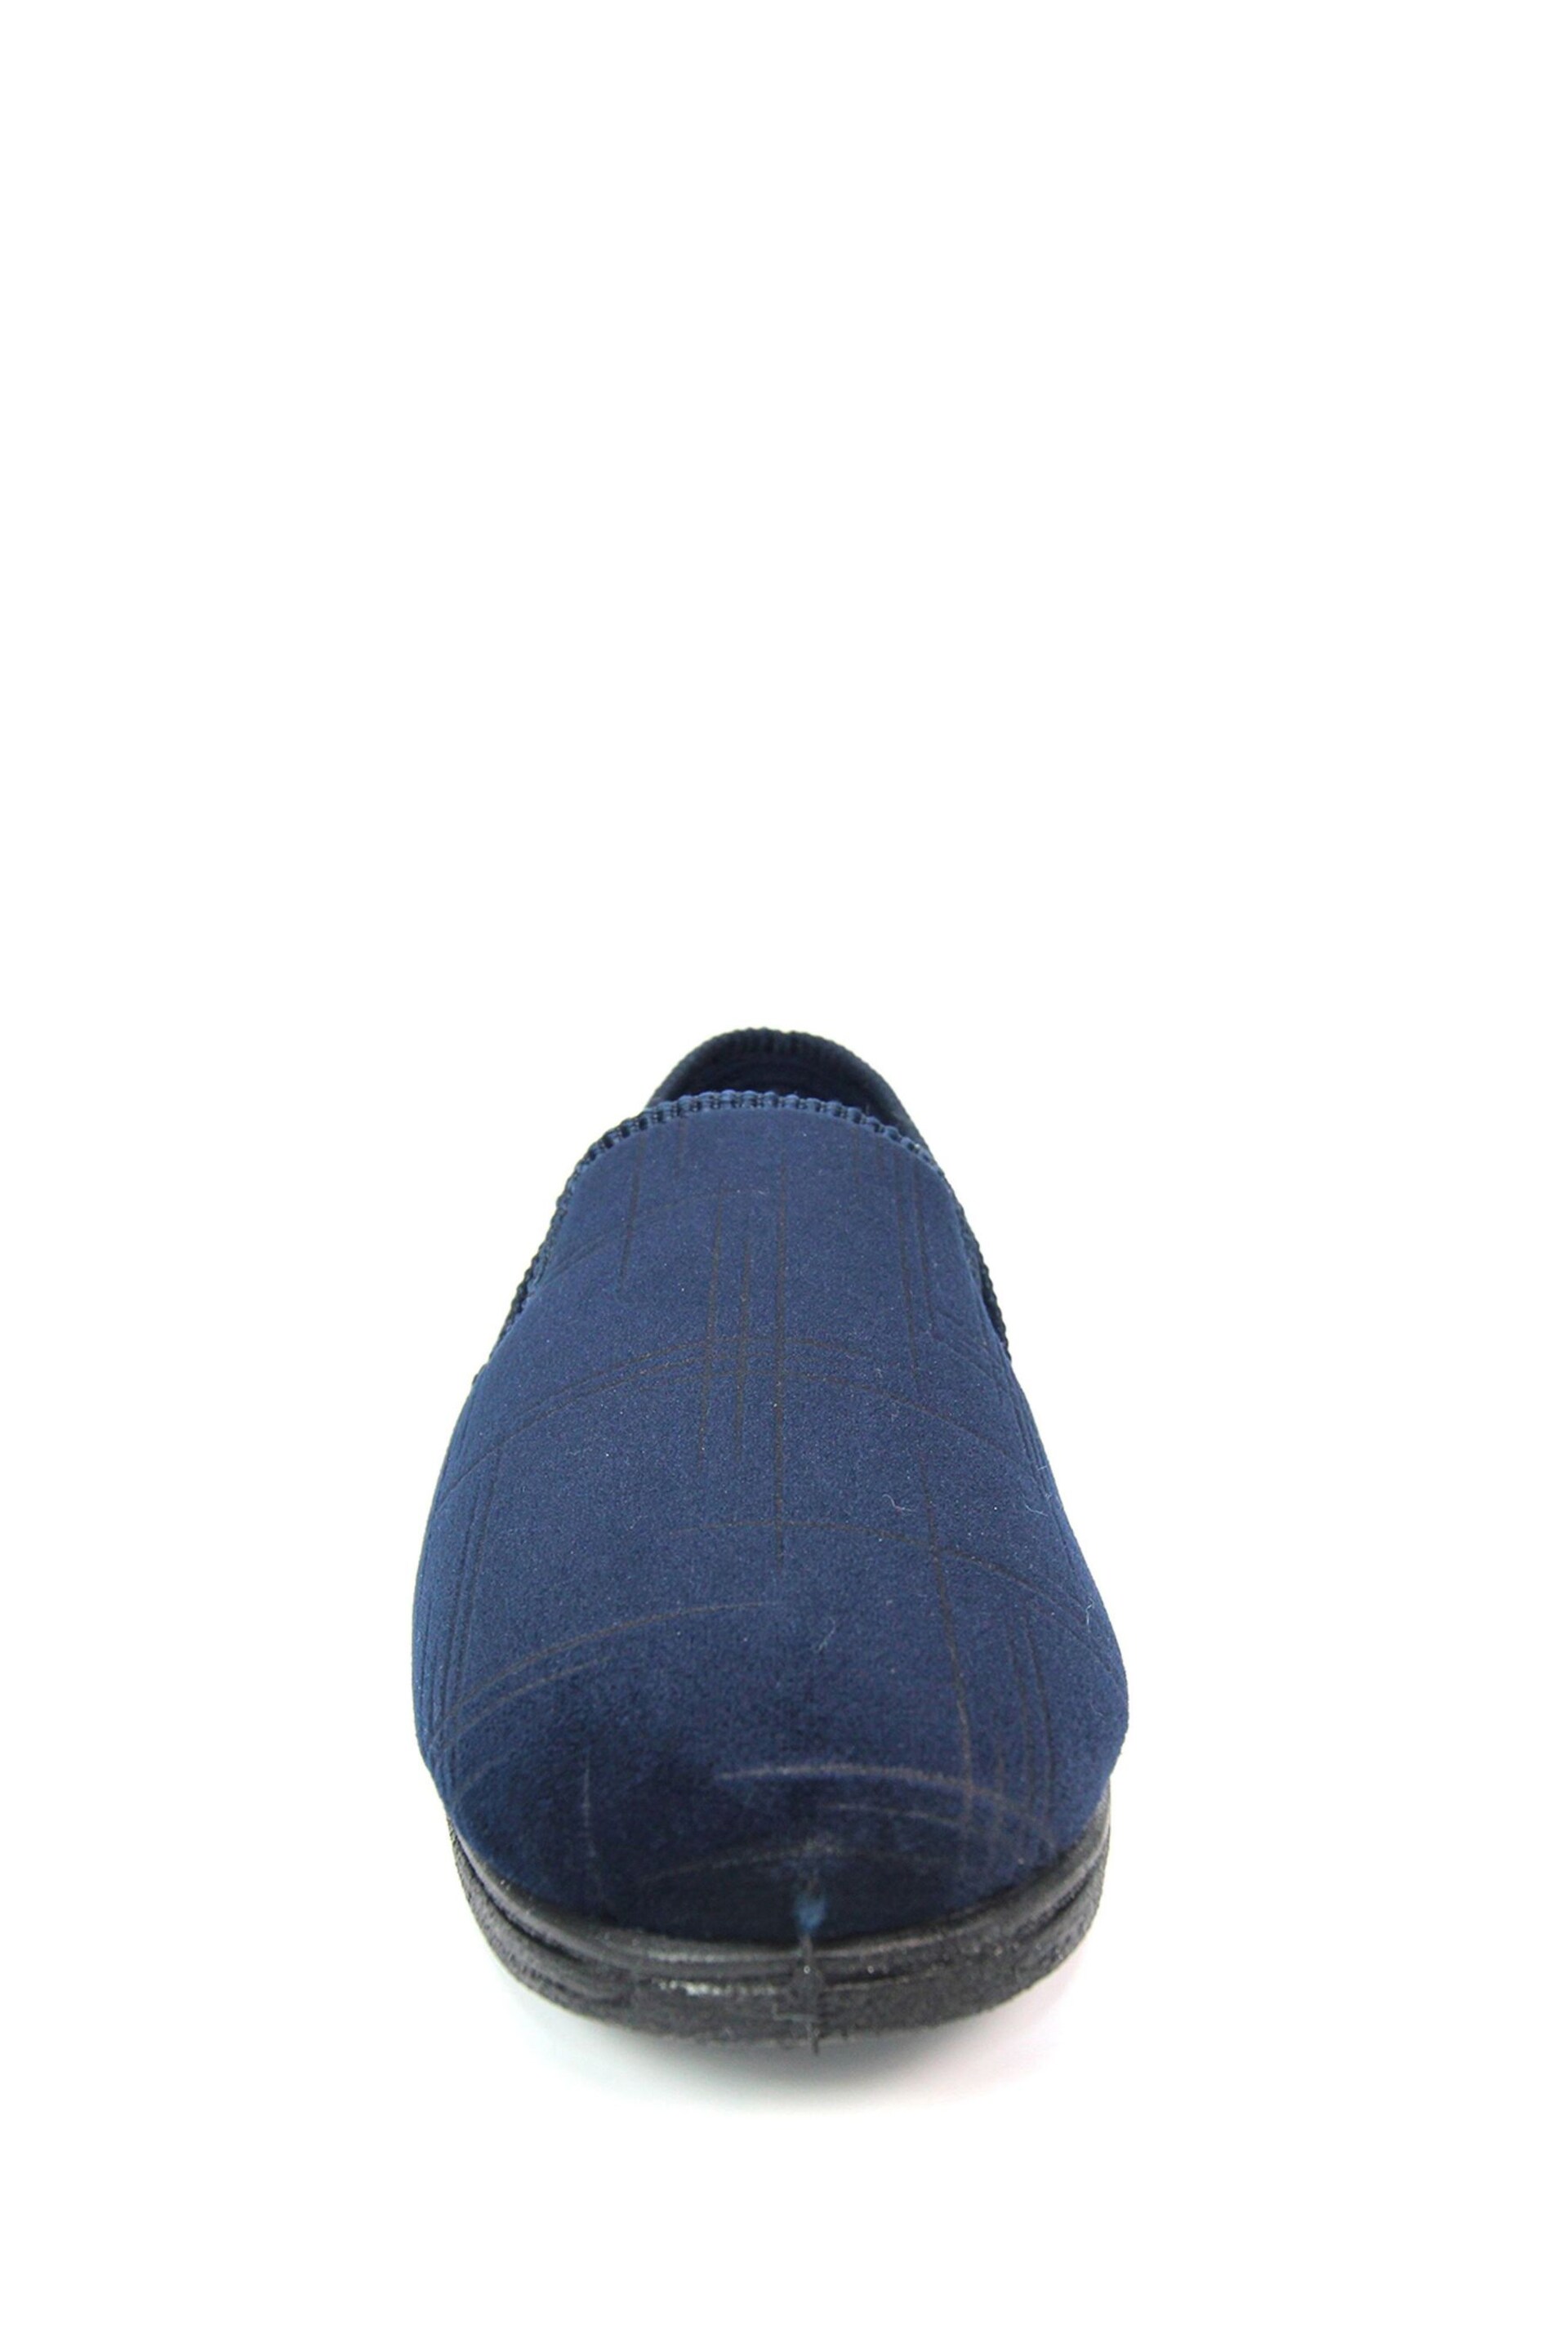 Goodyear Blue Denver Blue Slippers - Image 4 of 4